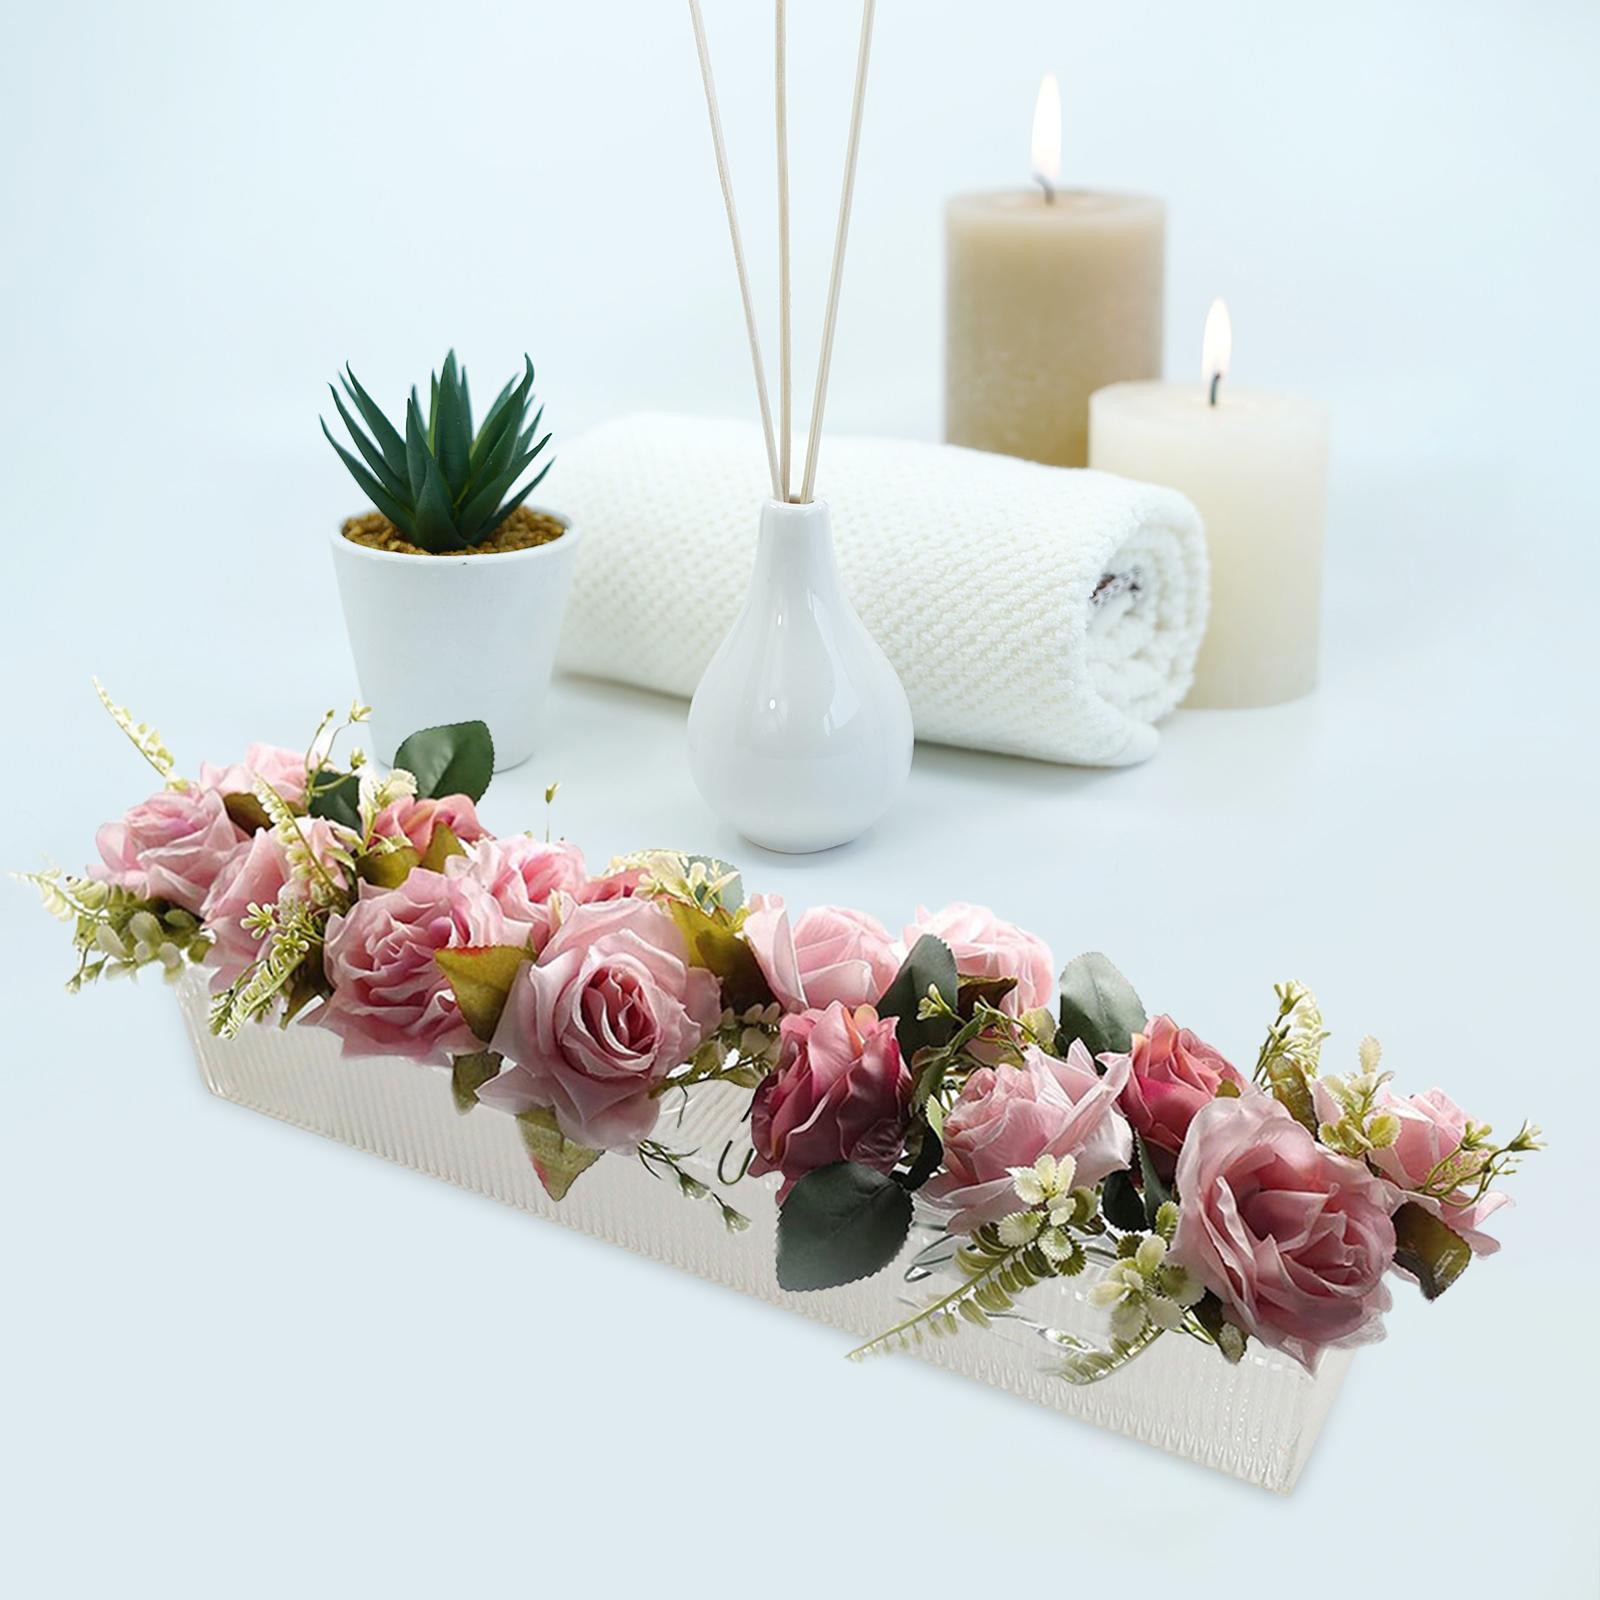 Acrylic Flower Vase Centerpiece Shelf Long Decorations with Vertical Stripes 40x10x6.5cm